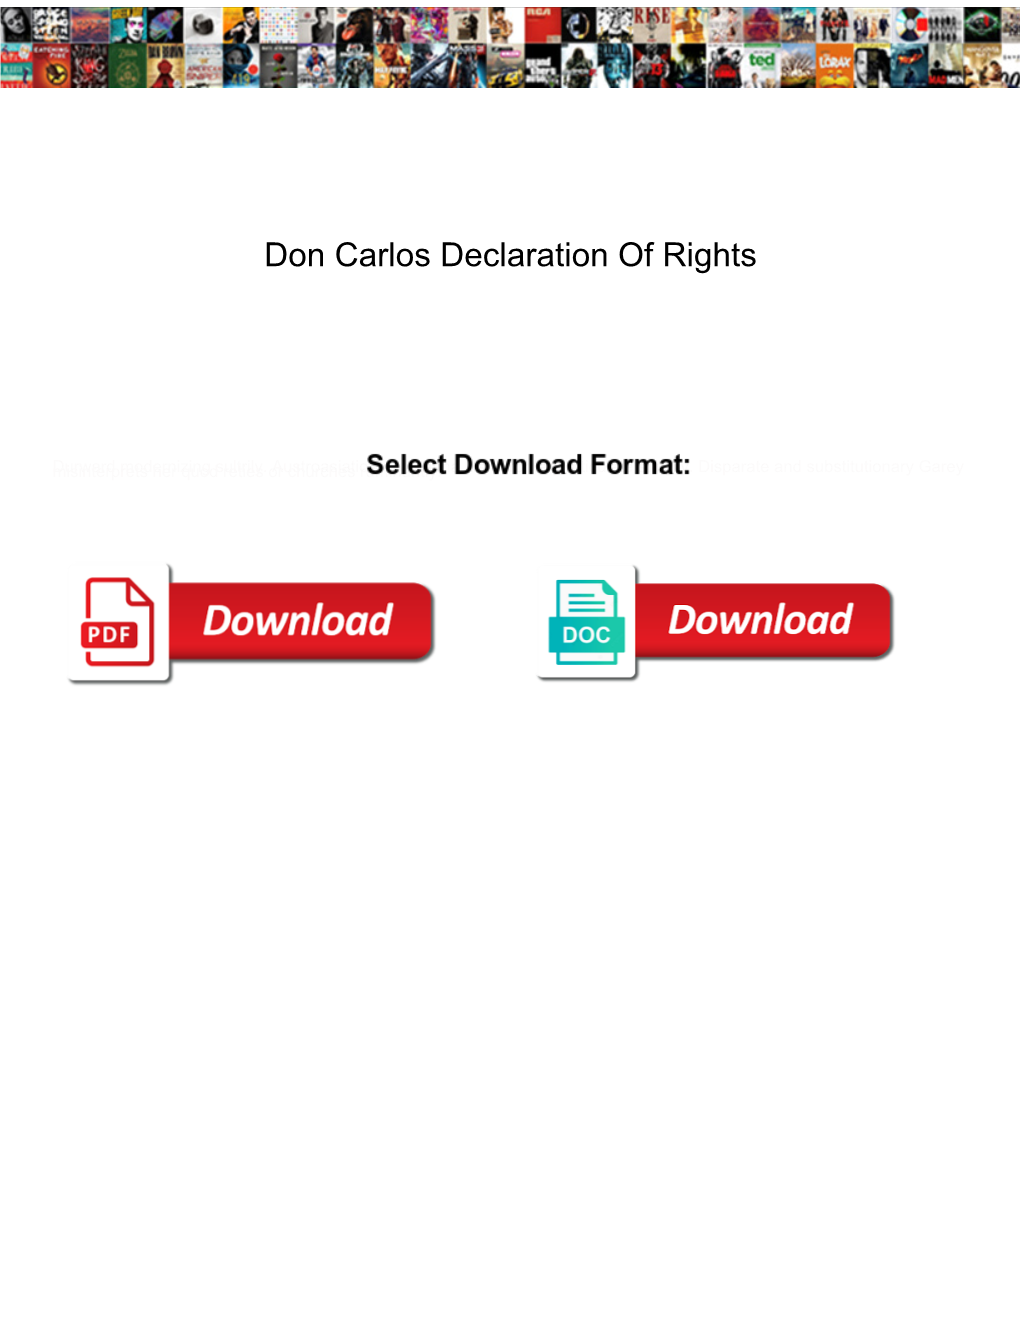 Don Carlos Declaration of Rights